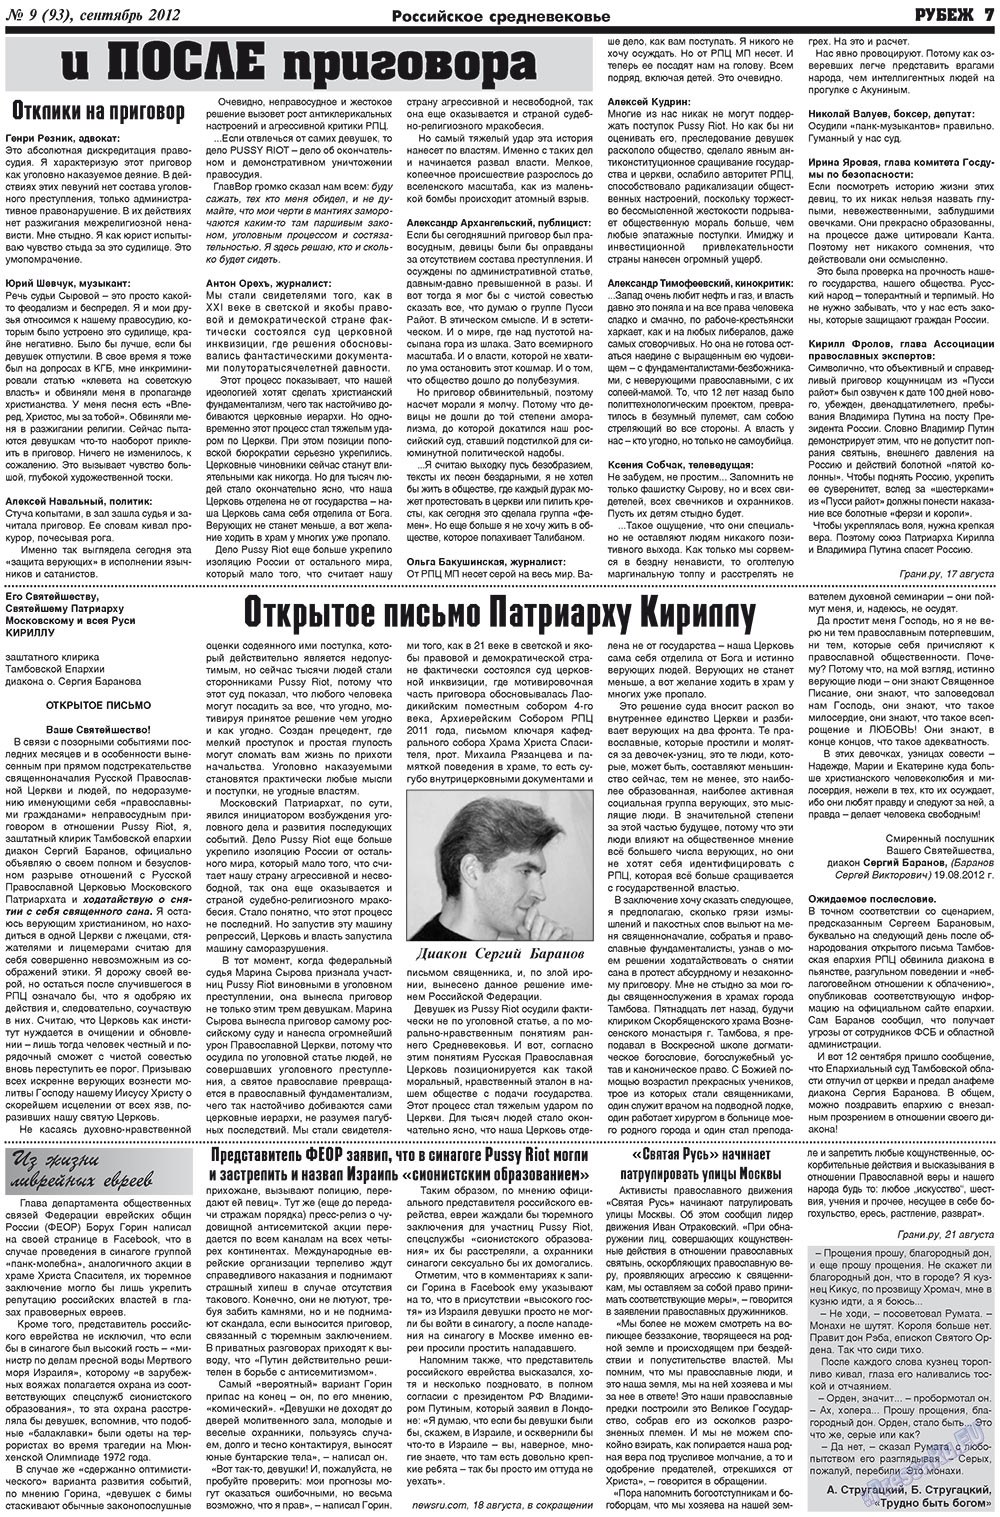 Рубеж, газета. 2012 №9 стр.7